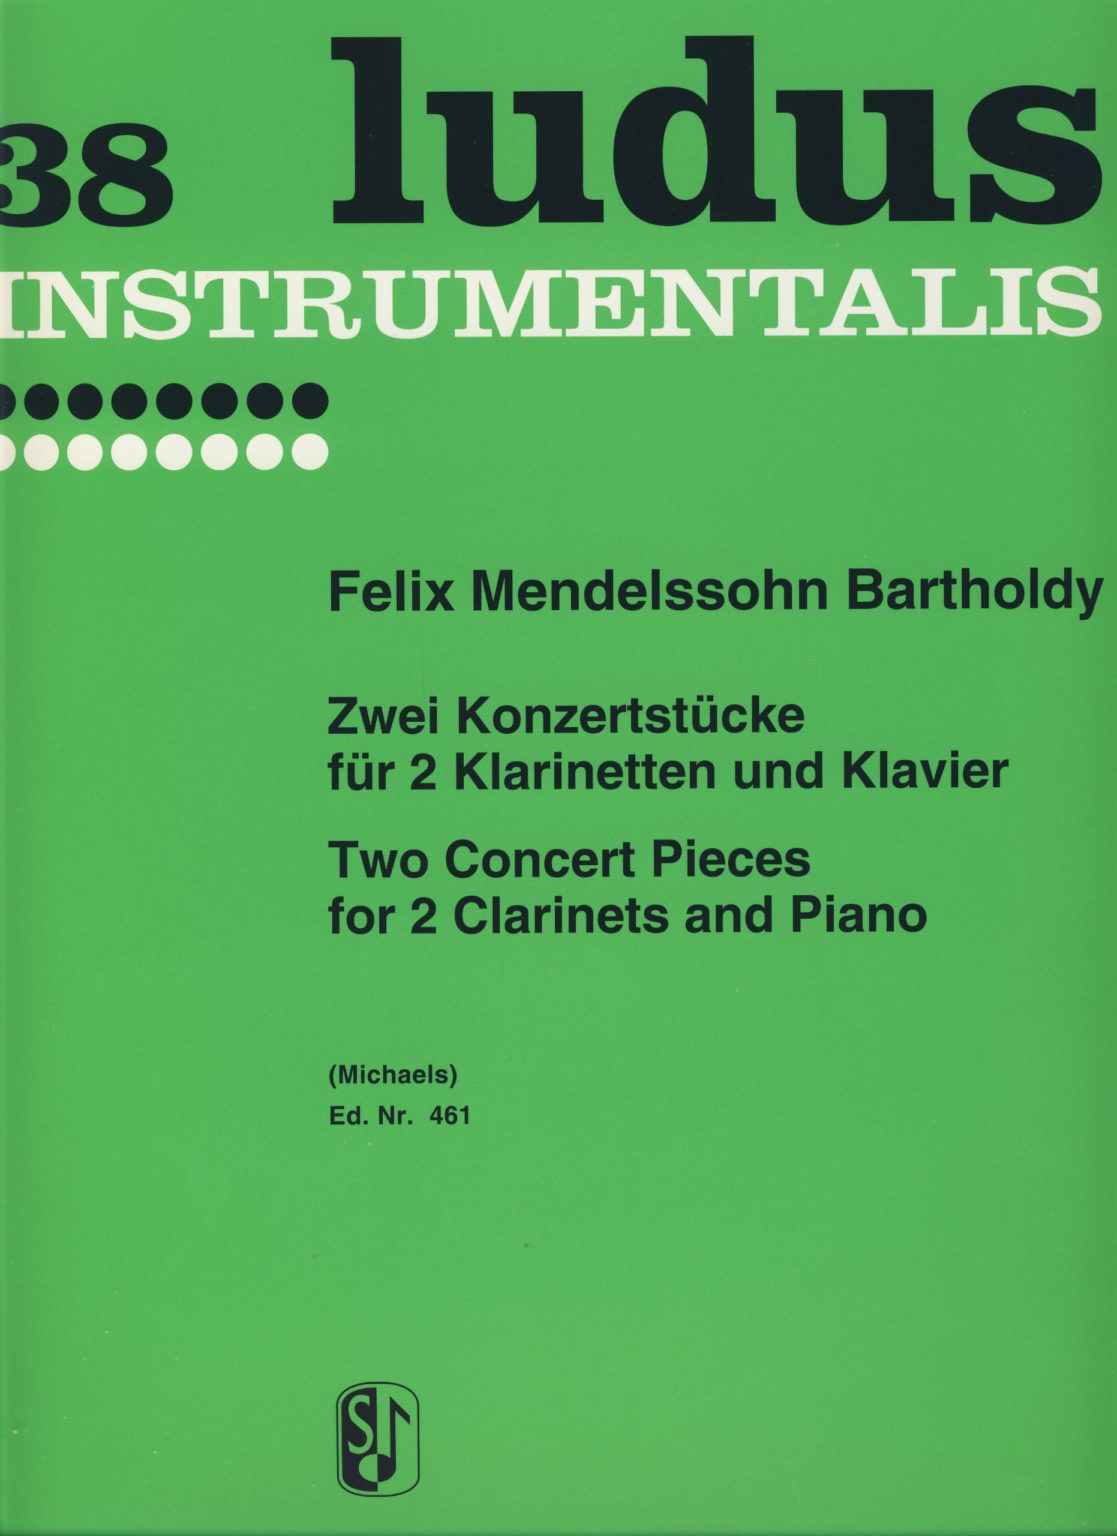 Zwei Konzertstücke para dos clarinetes y piano. Felix Mendelssohn-Bartholdy